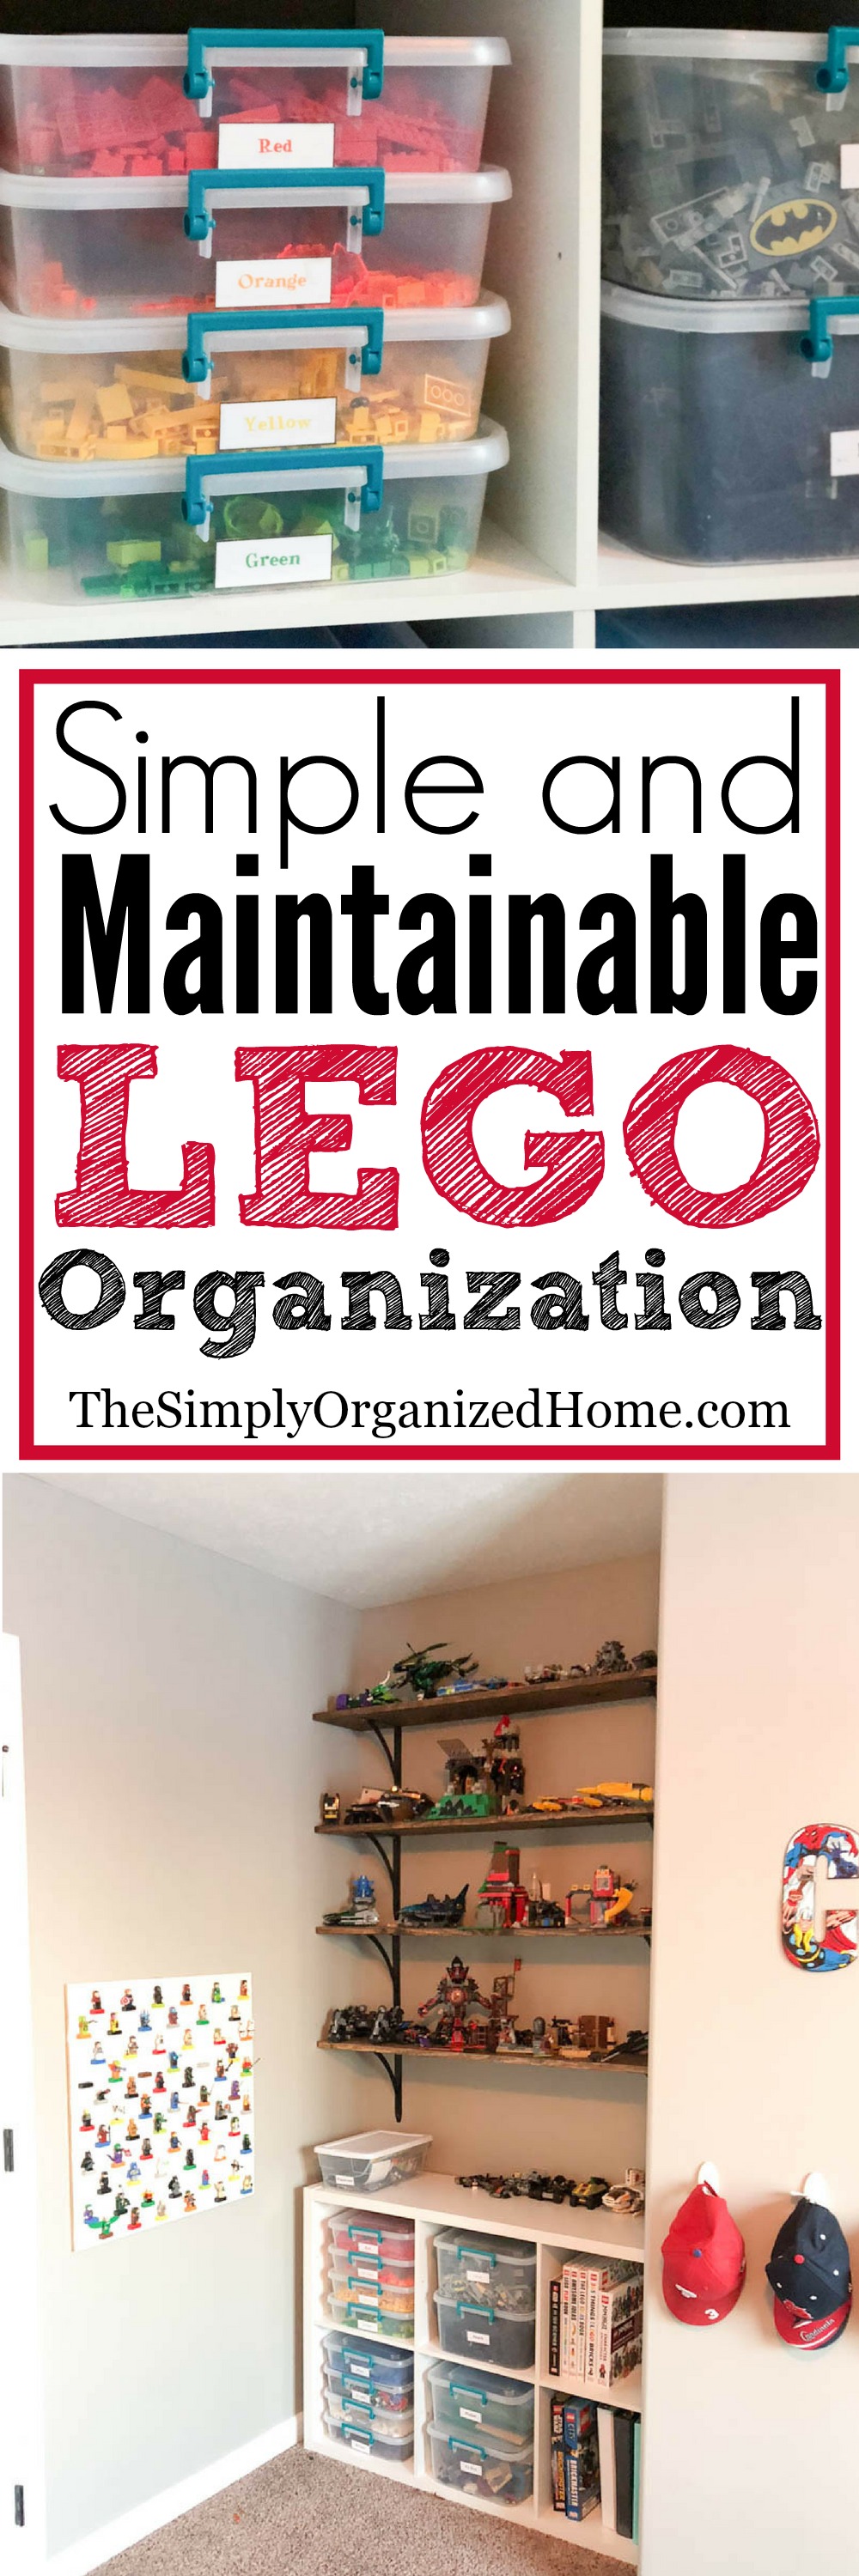 Lego Storage Tips For Older Kids - Organized-ish